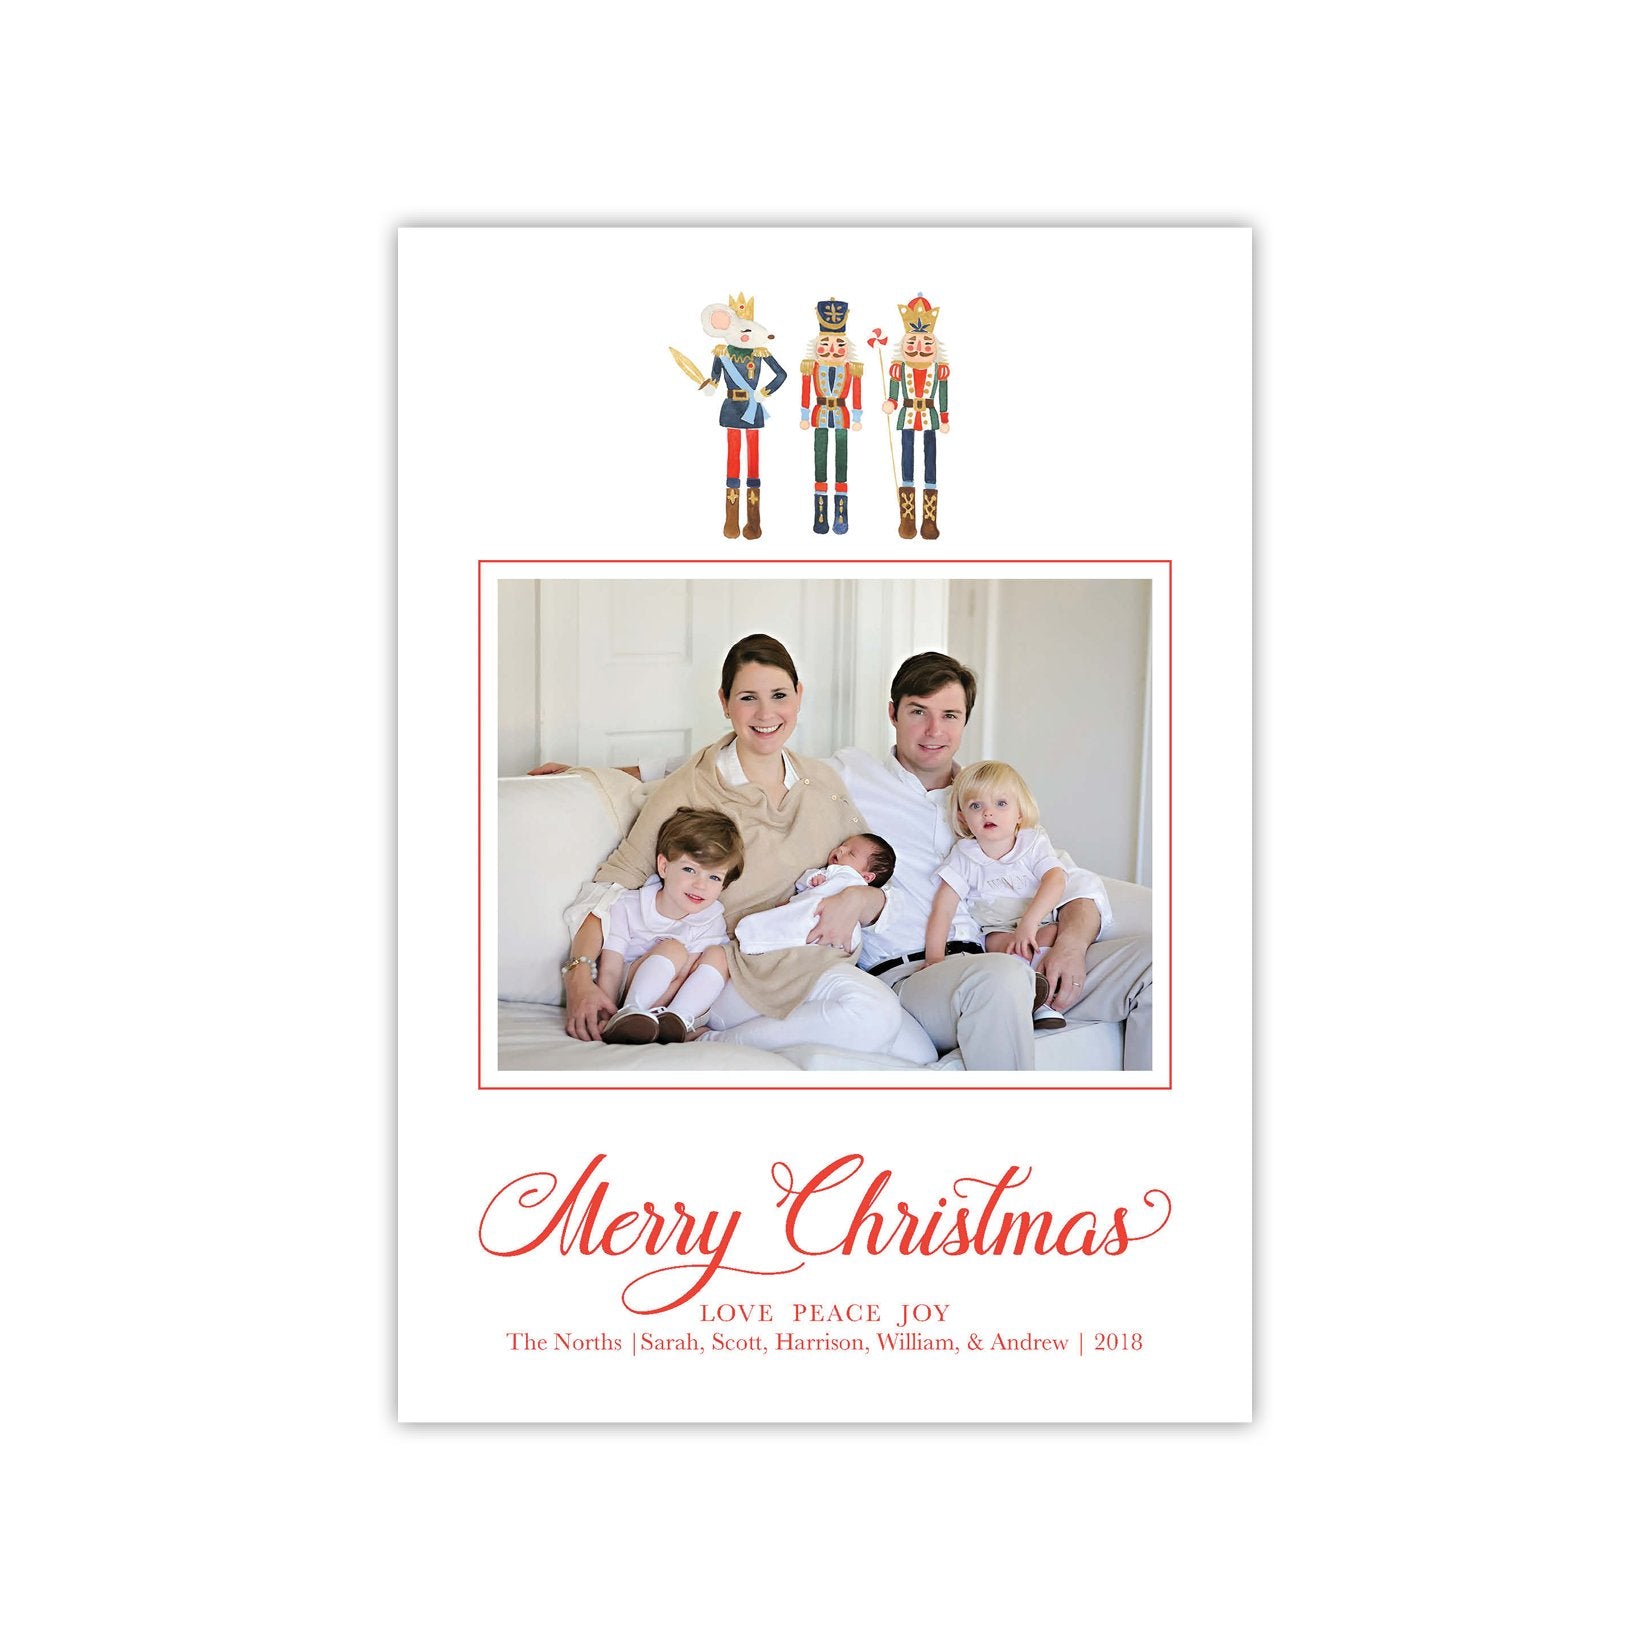 Merry Christmas Nutcrackers Holiday Card